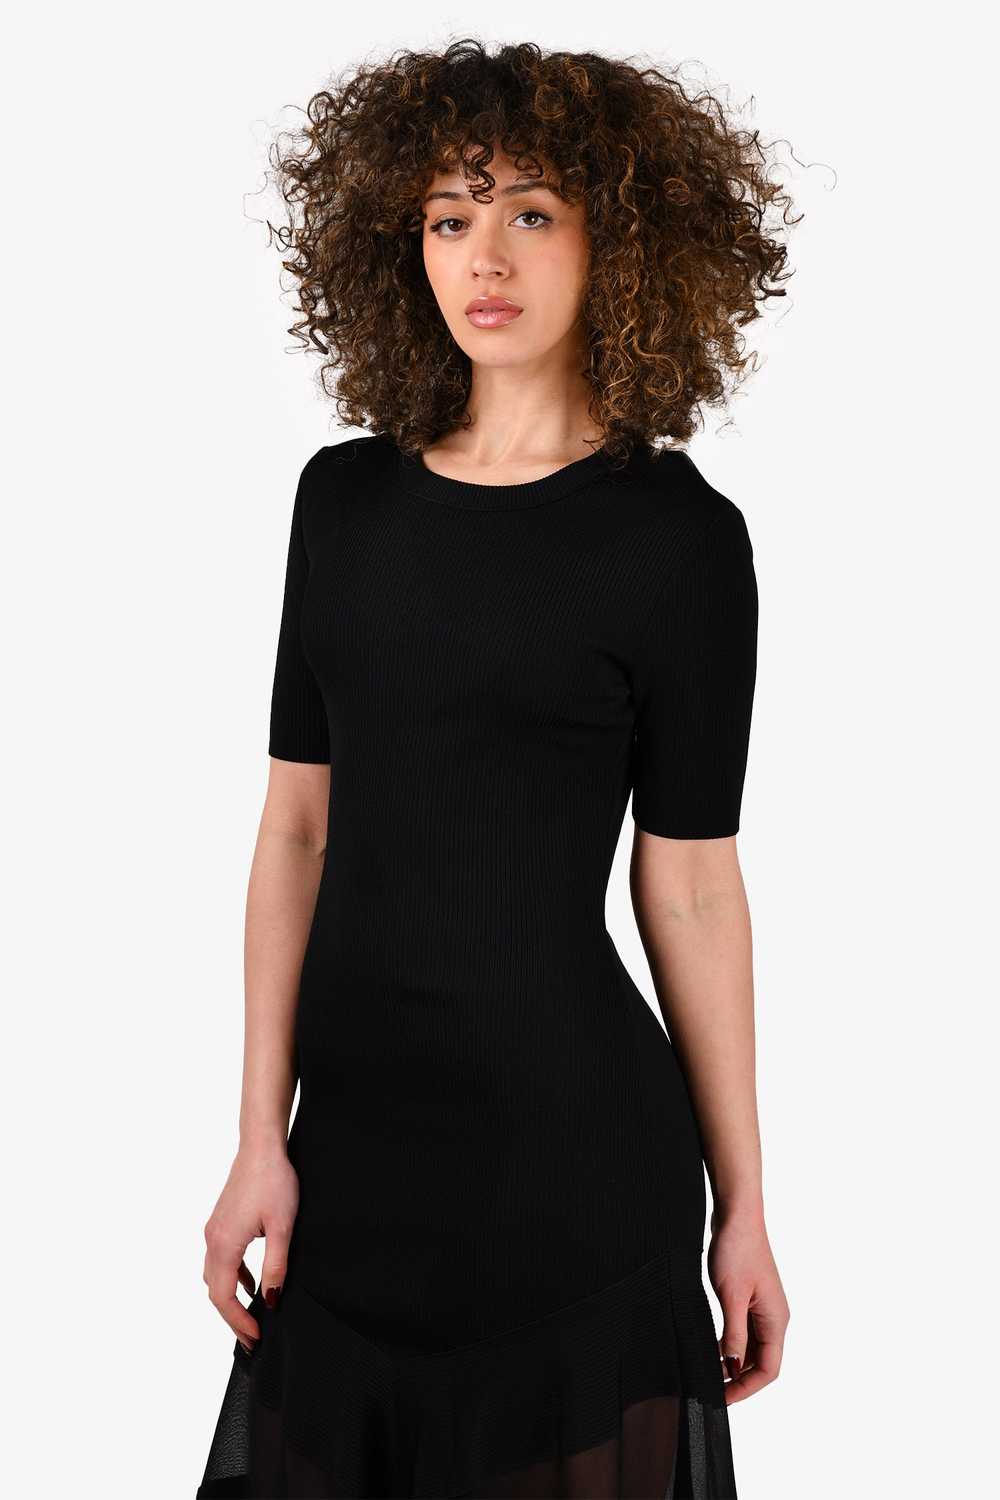 Givenchy Black Ribbed A Line Dress Size M - image 3